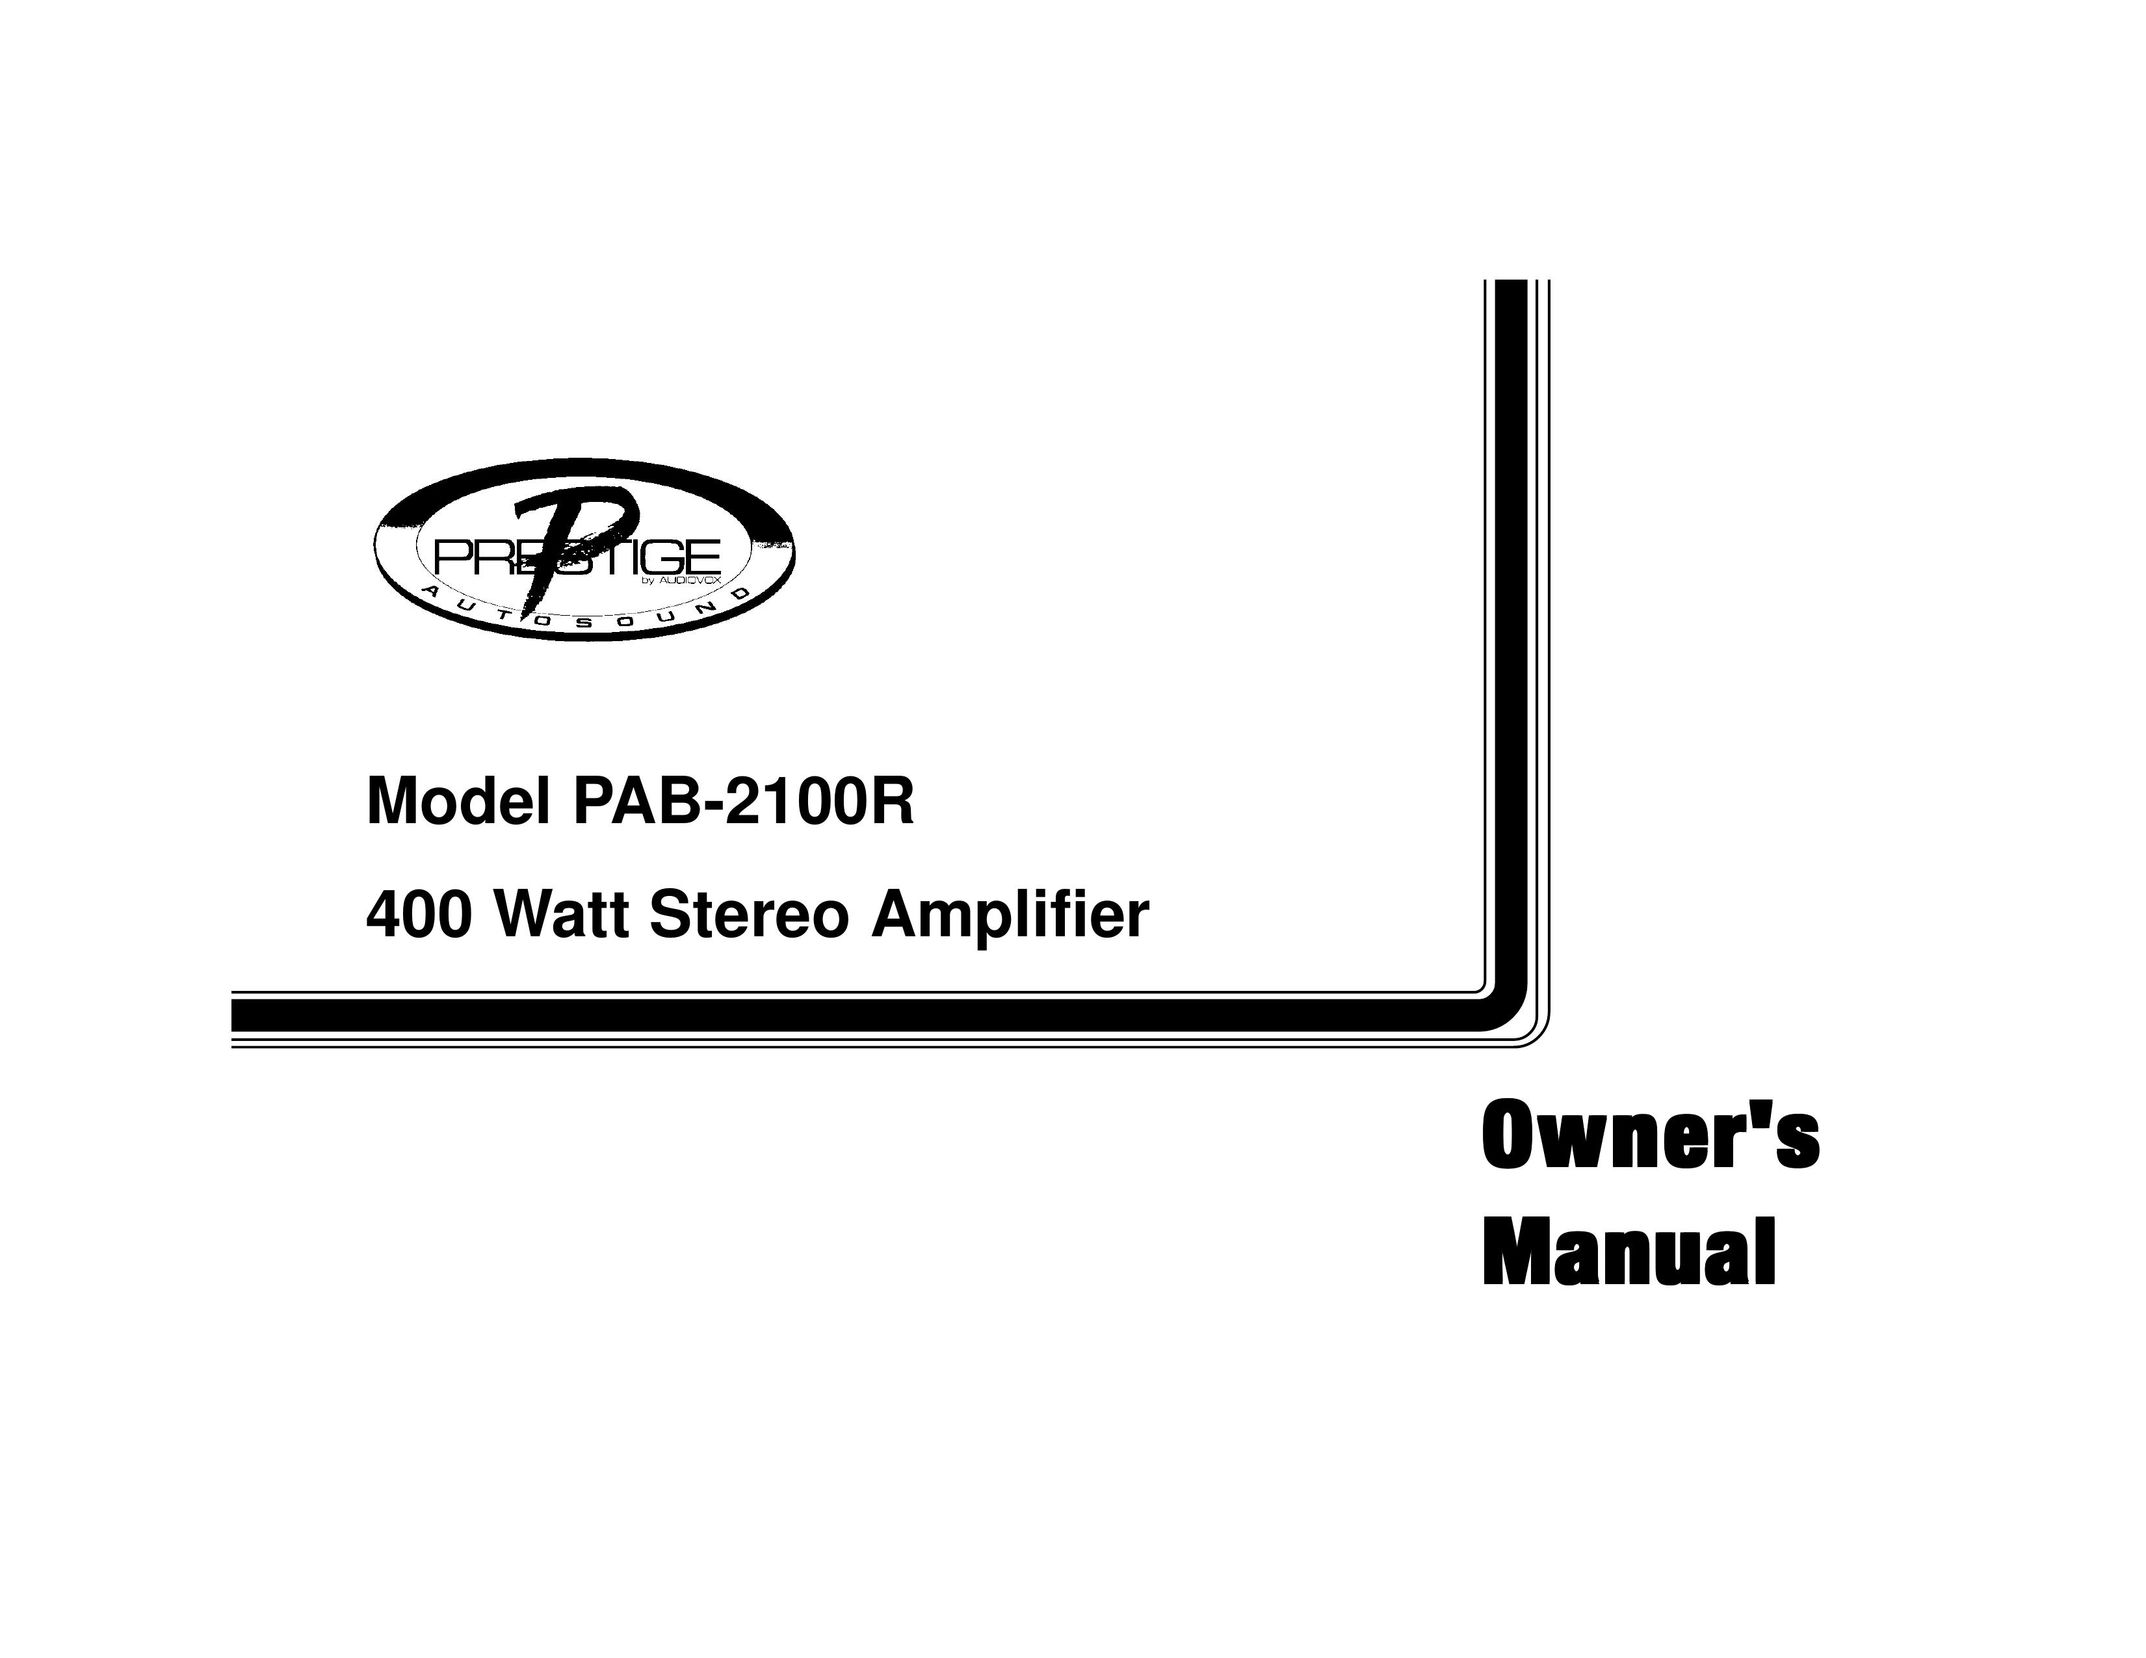 Audiovox PAB-2100R Stereo Amplifier User Manual